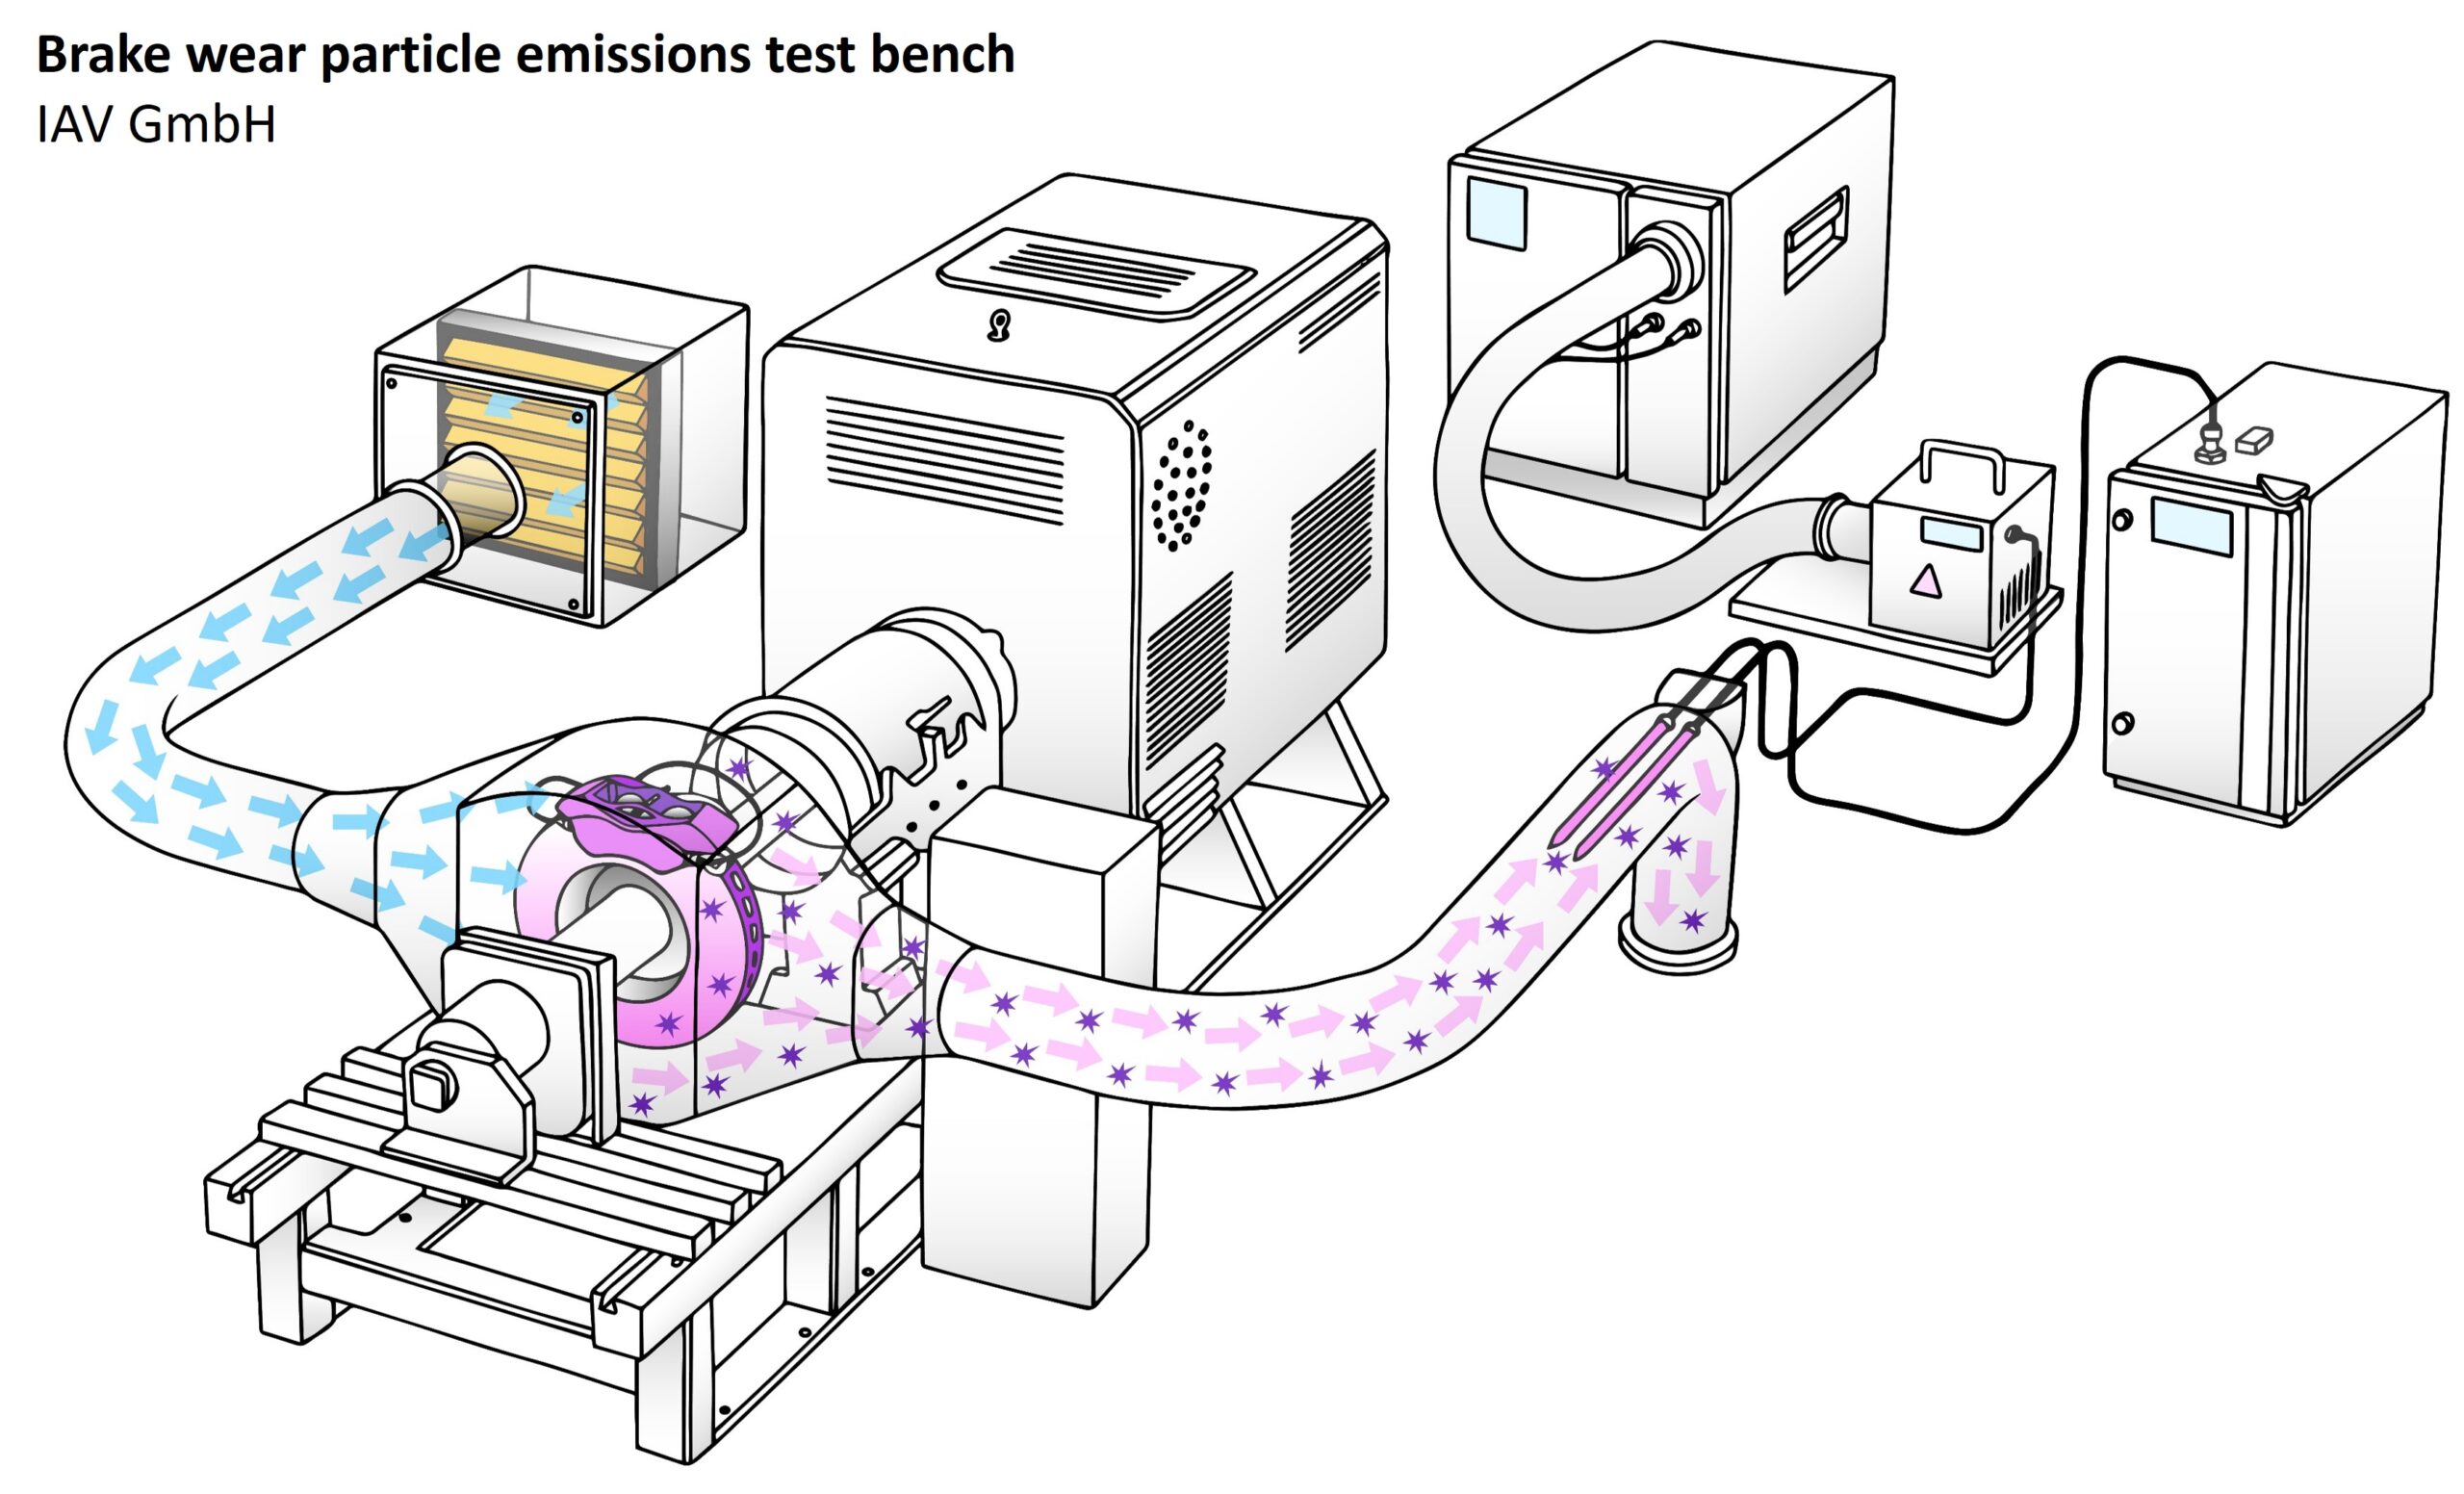 Break wear particle emissions test bench